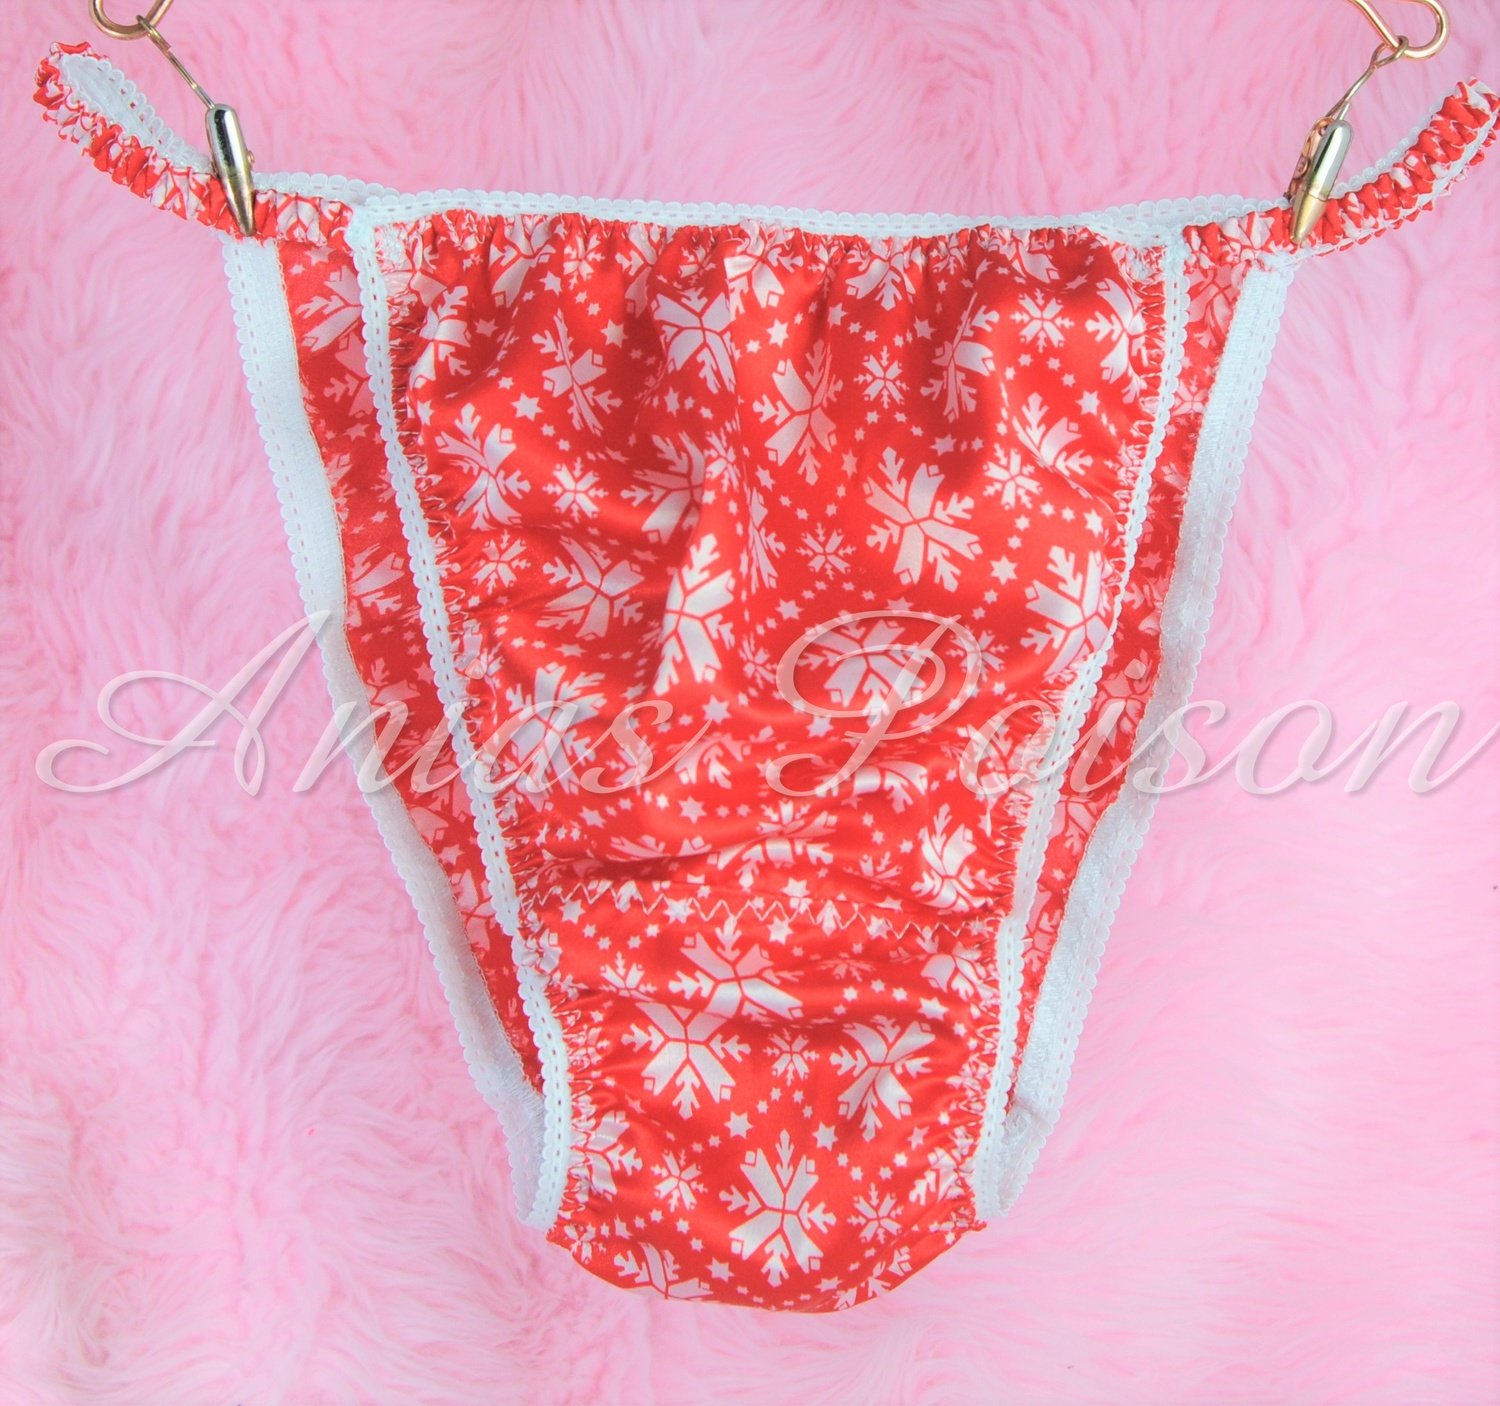 SALE Ania's Poison Christmas Edition 100% polyester silky soft Snowflake string bikini sissy mens underwear panties 2 left!